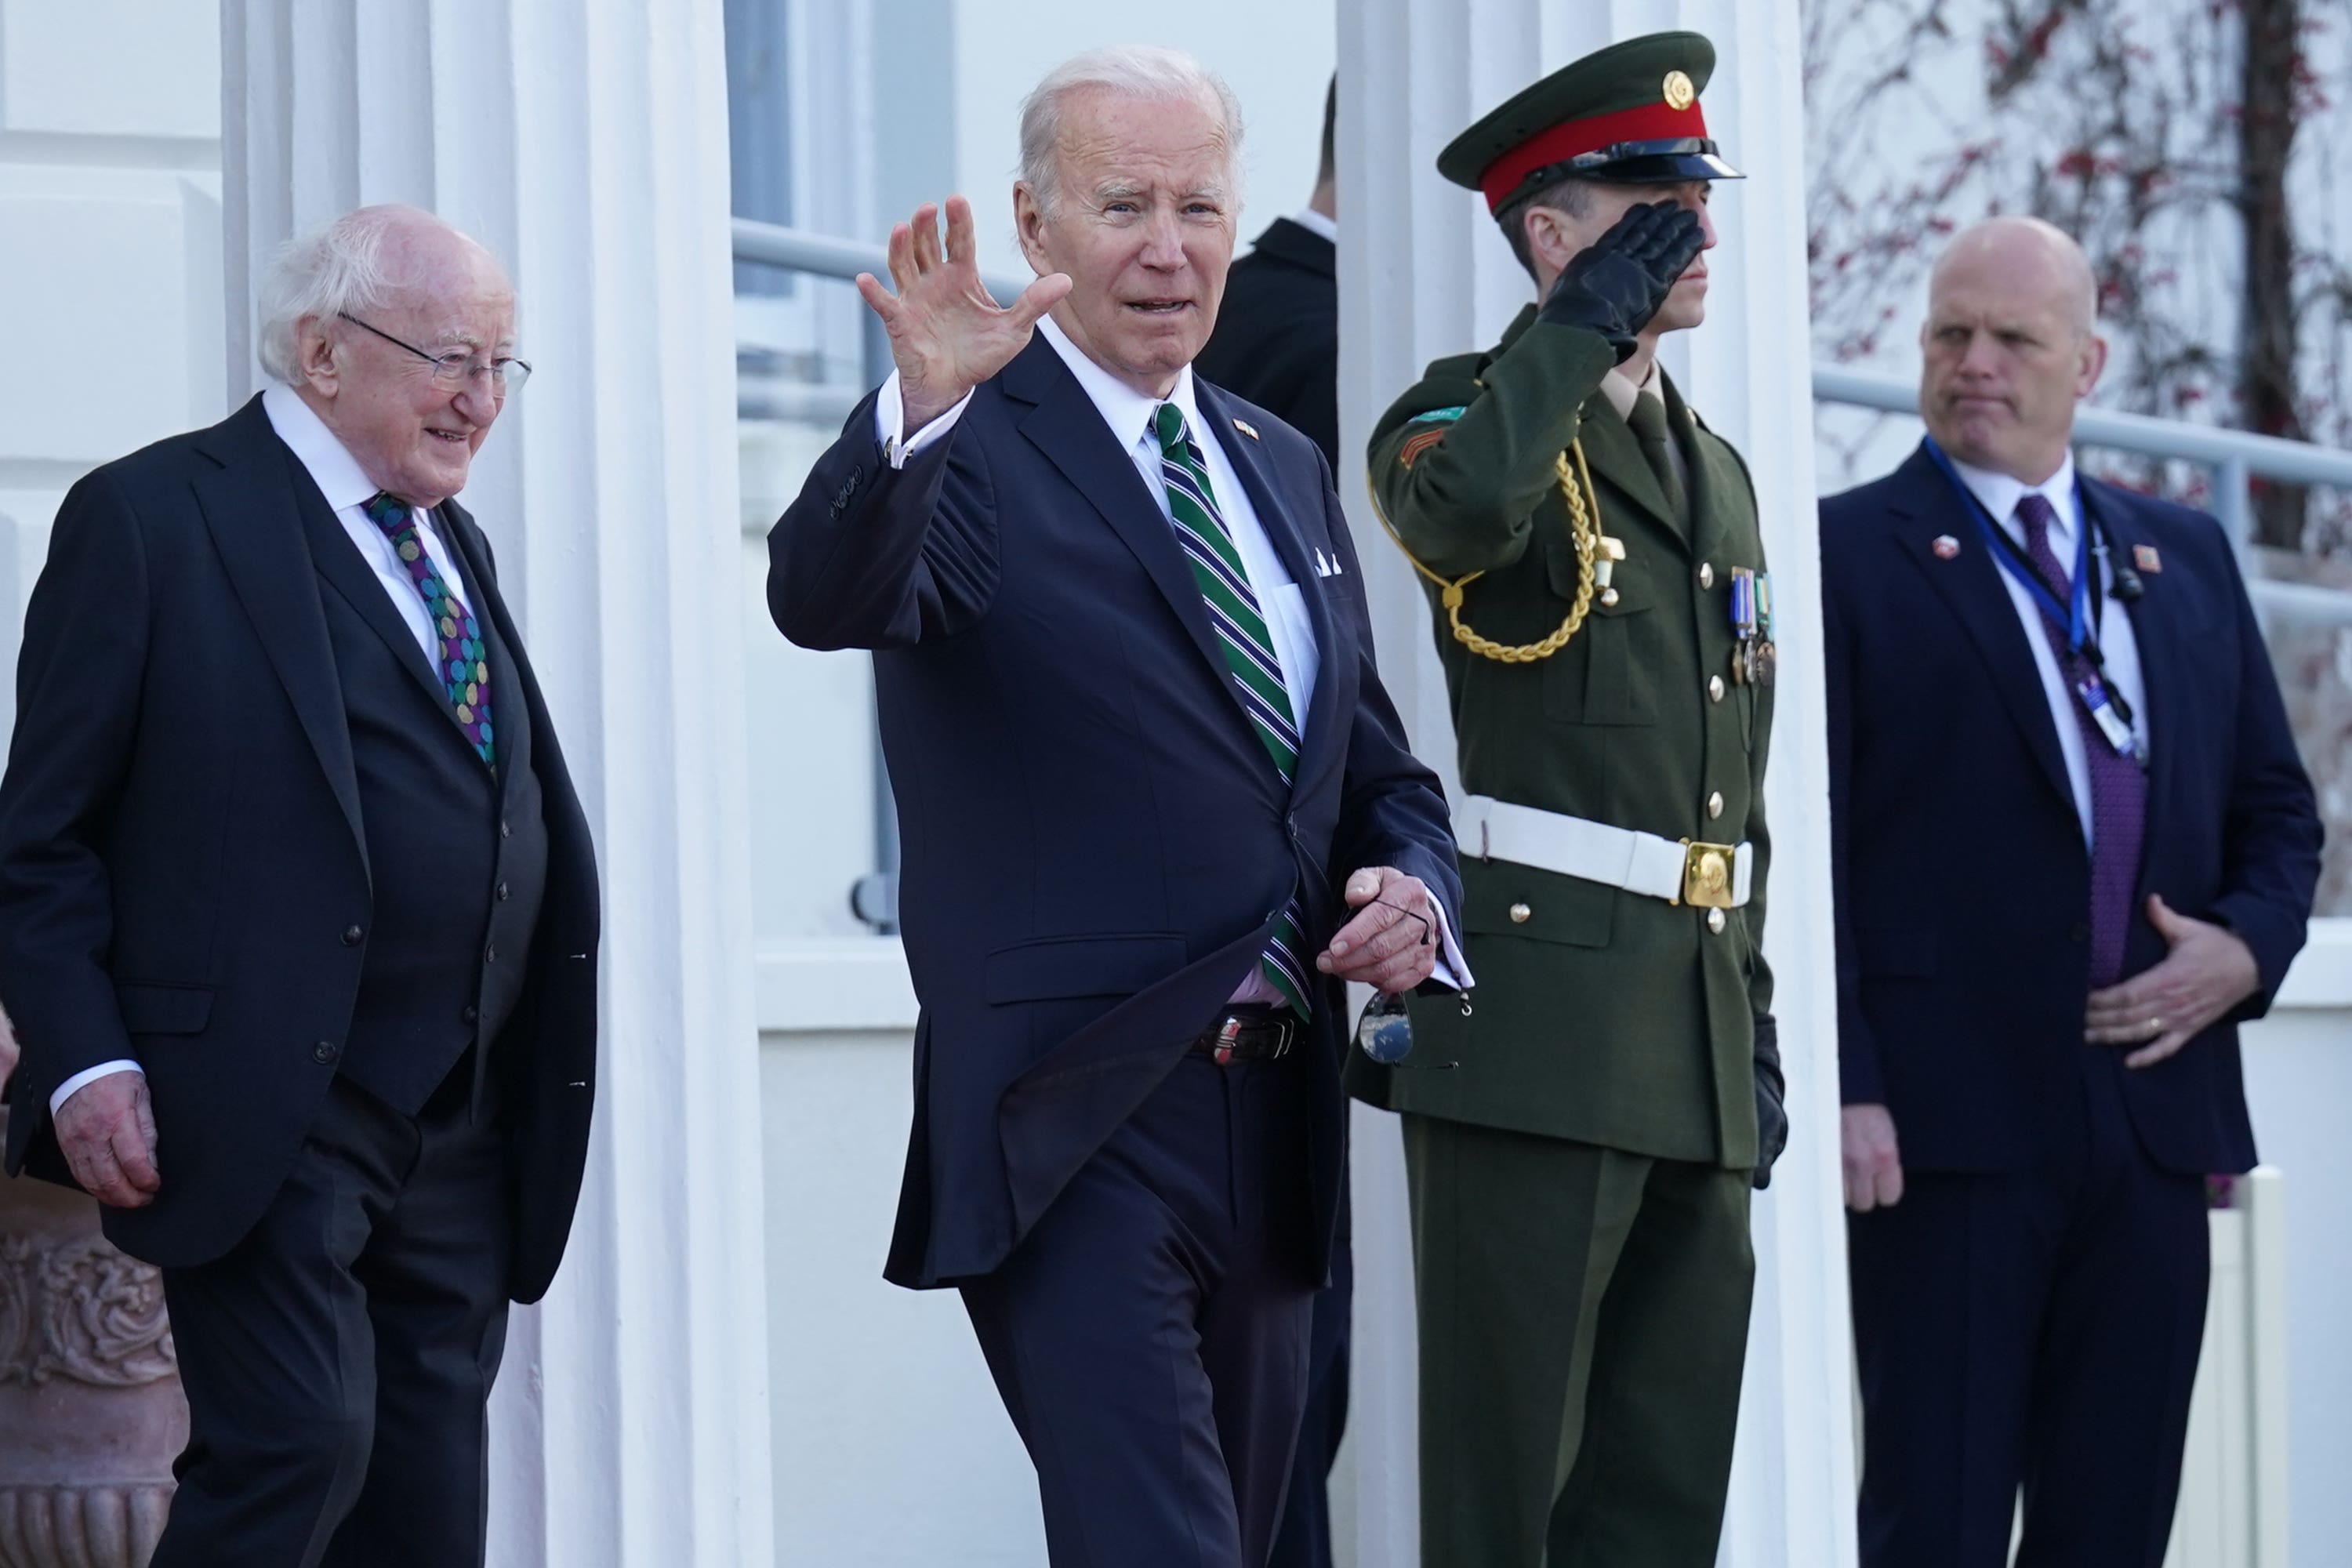 Irish President Michael D Higgins walks behind US President Joe Biden as he departs following a meeting at Aras an Uachtarain (Brian Lawless/PA)